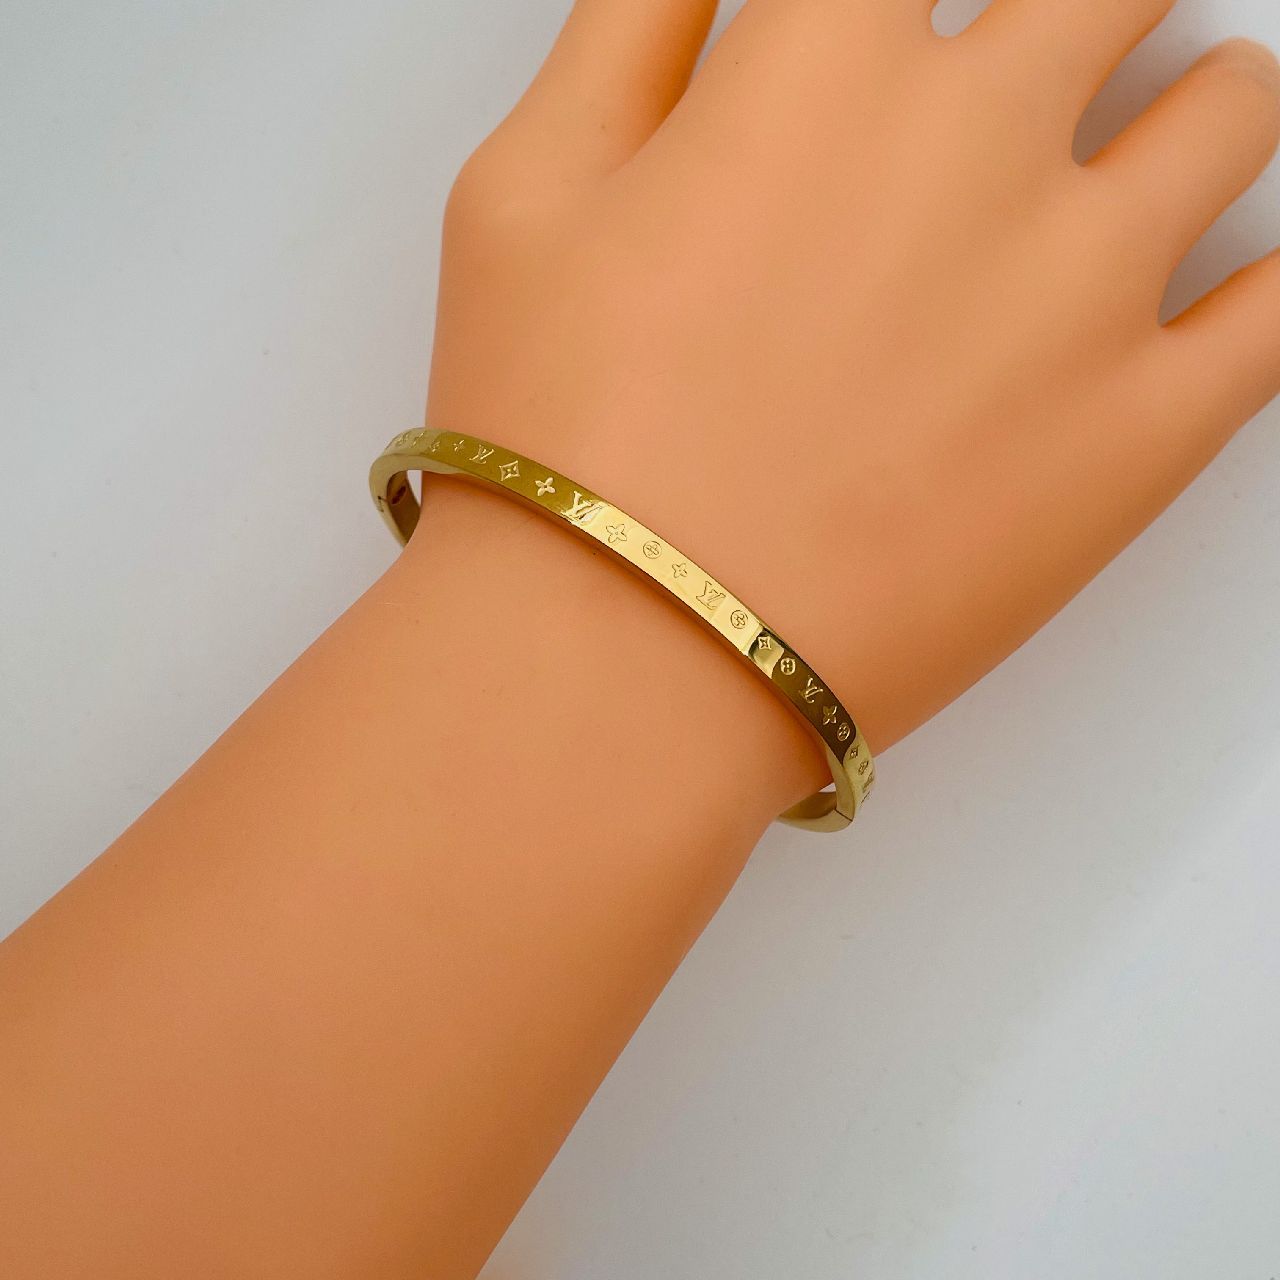 Buy 200 Womens Bracelets Online  BlueStonecom  Indias 1 Online  Jewellery Brand